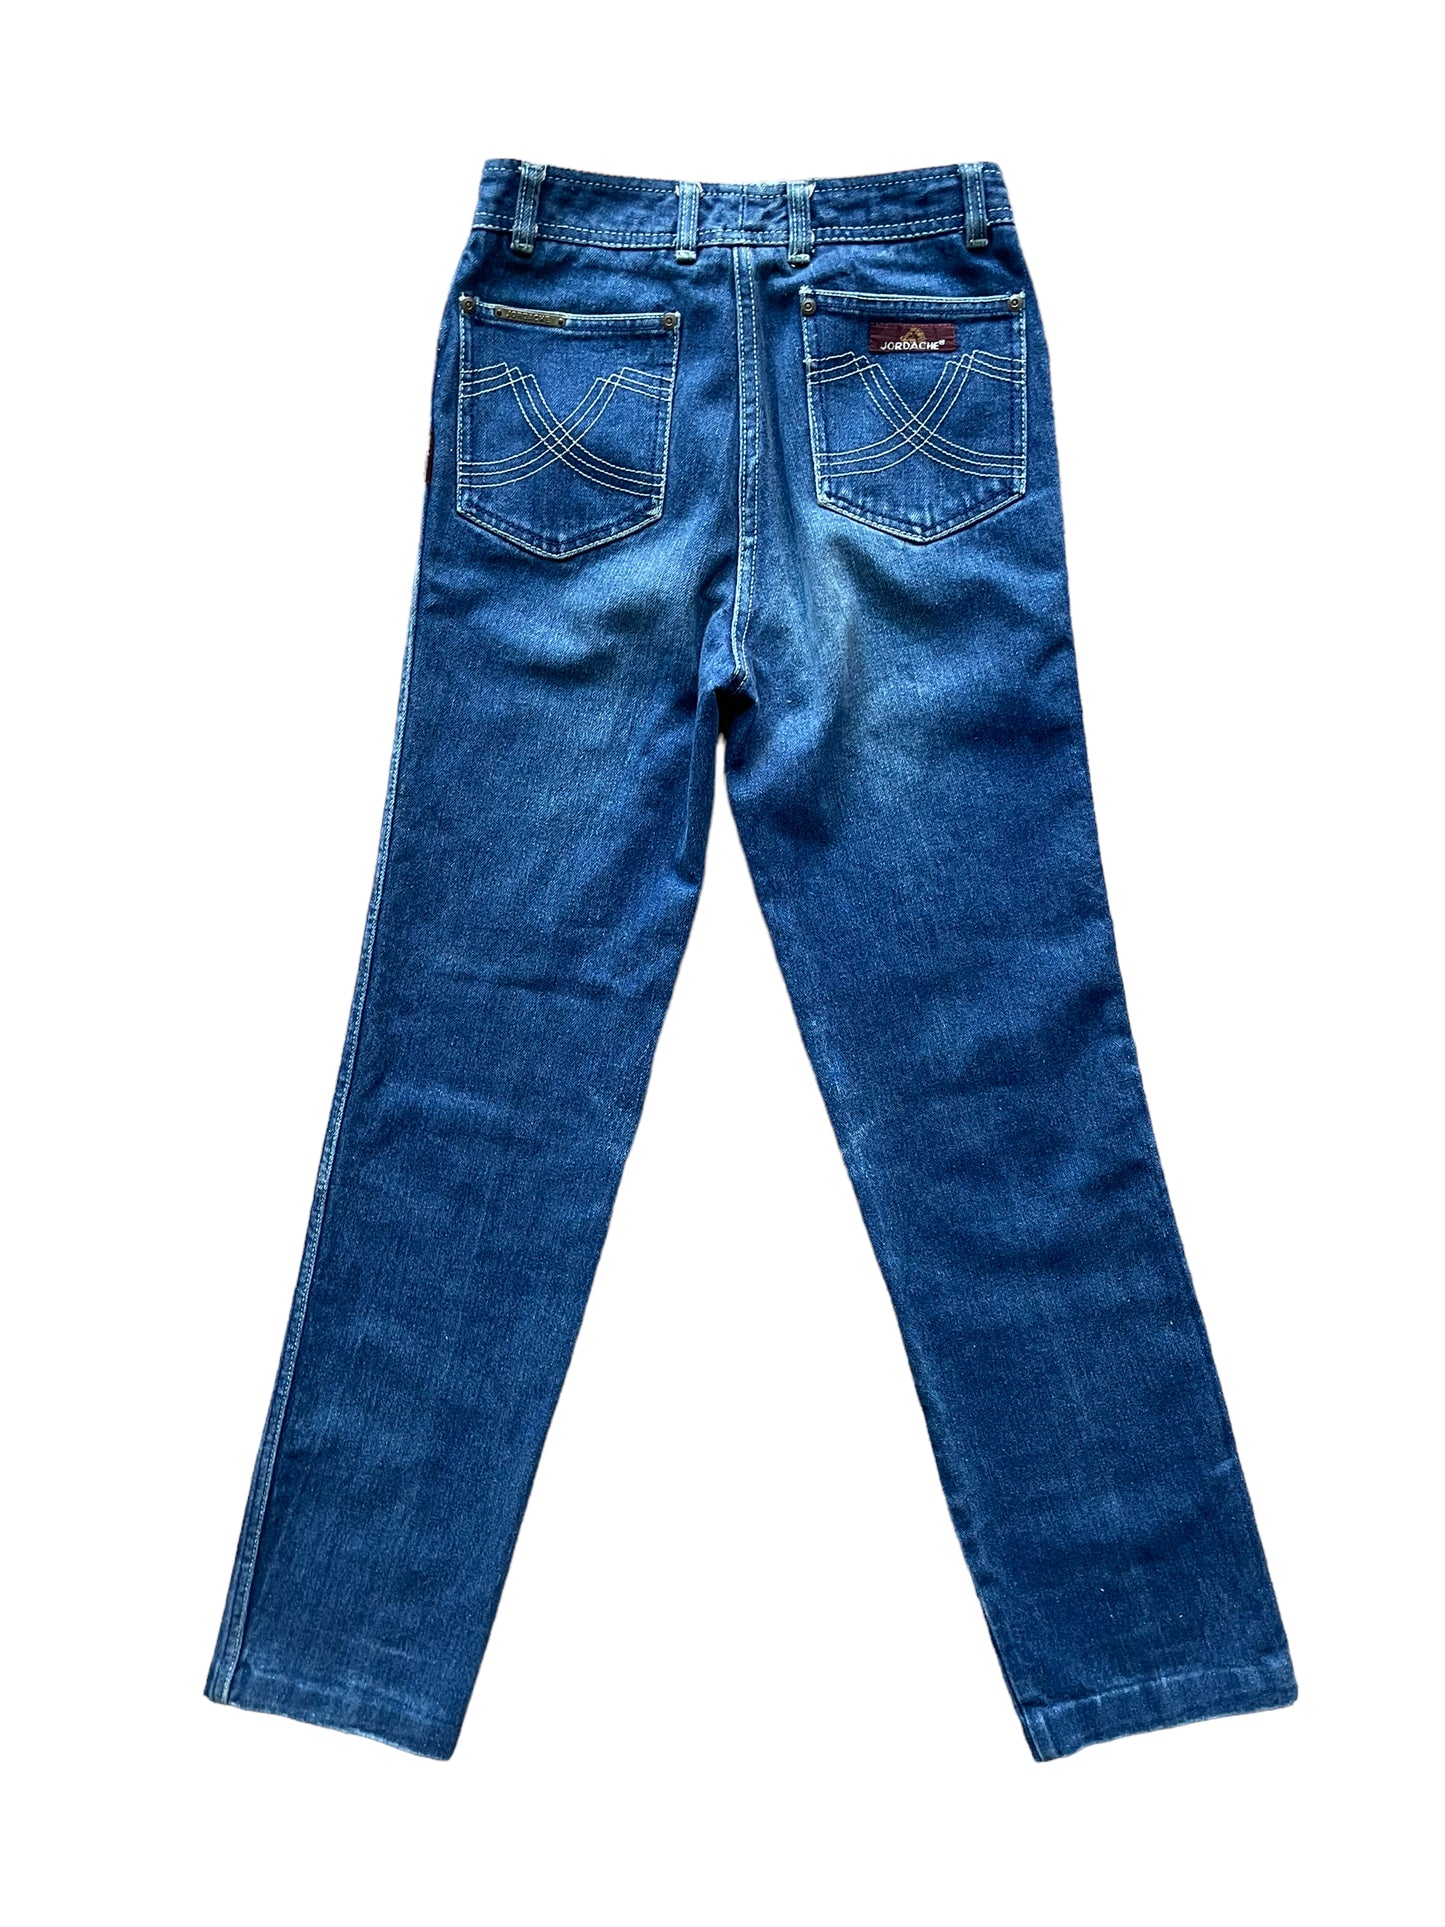 Full back view of Vintage 1980s Jordache Jeans Sz SM 